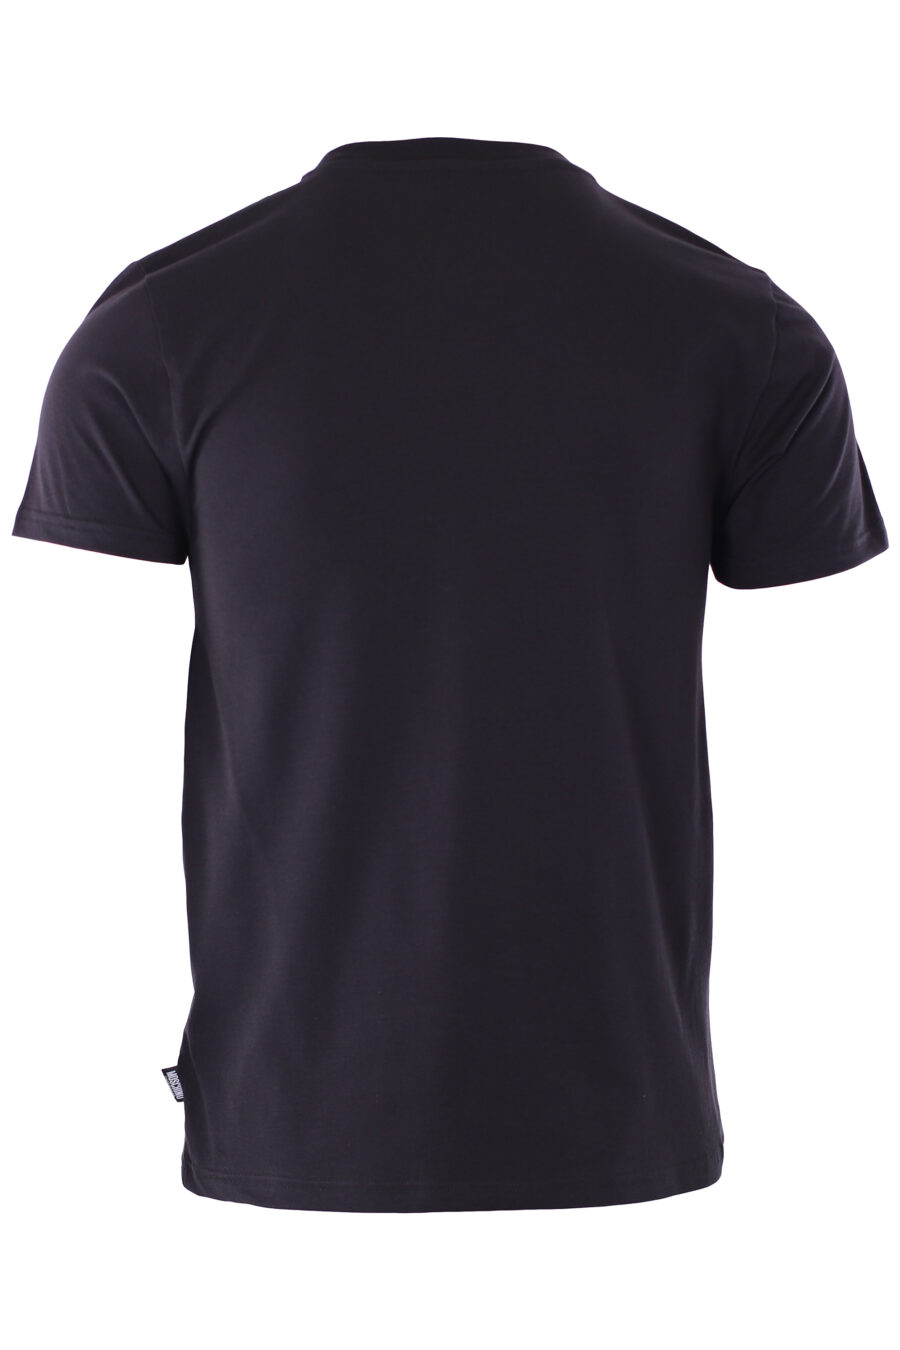 Camiseta negra con minilogo "underbear" - IMG 6589 1